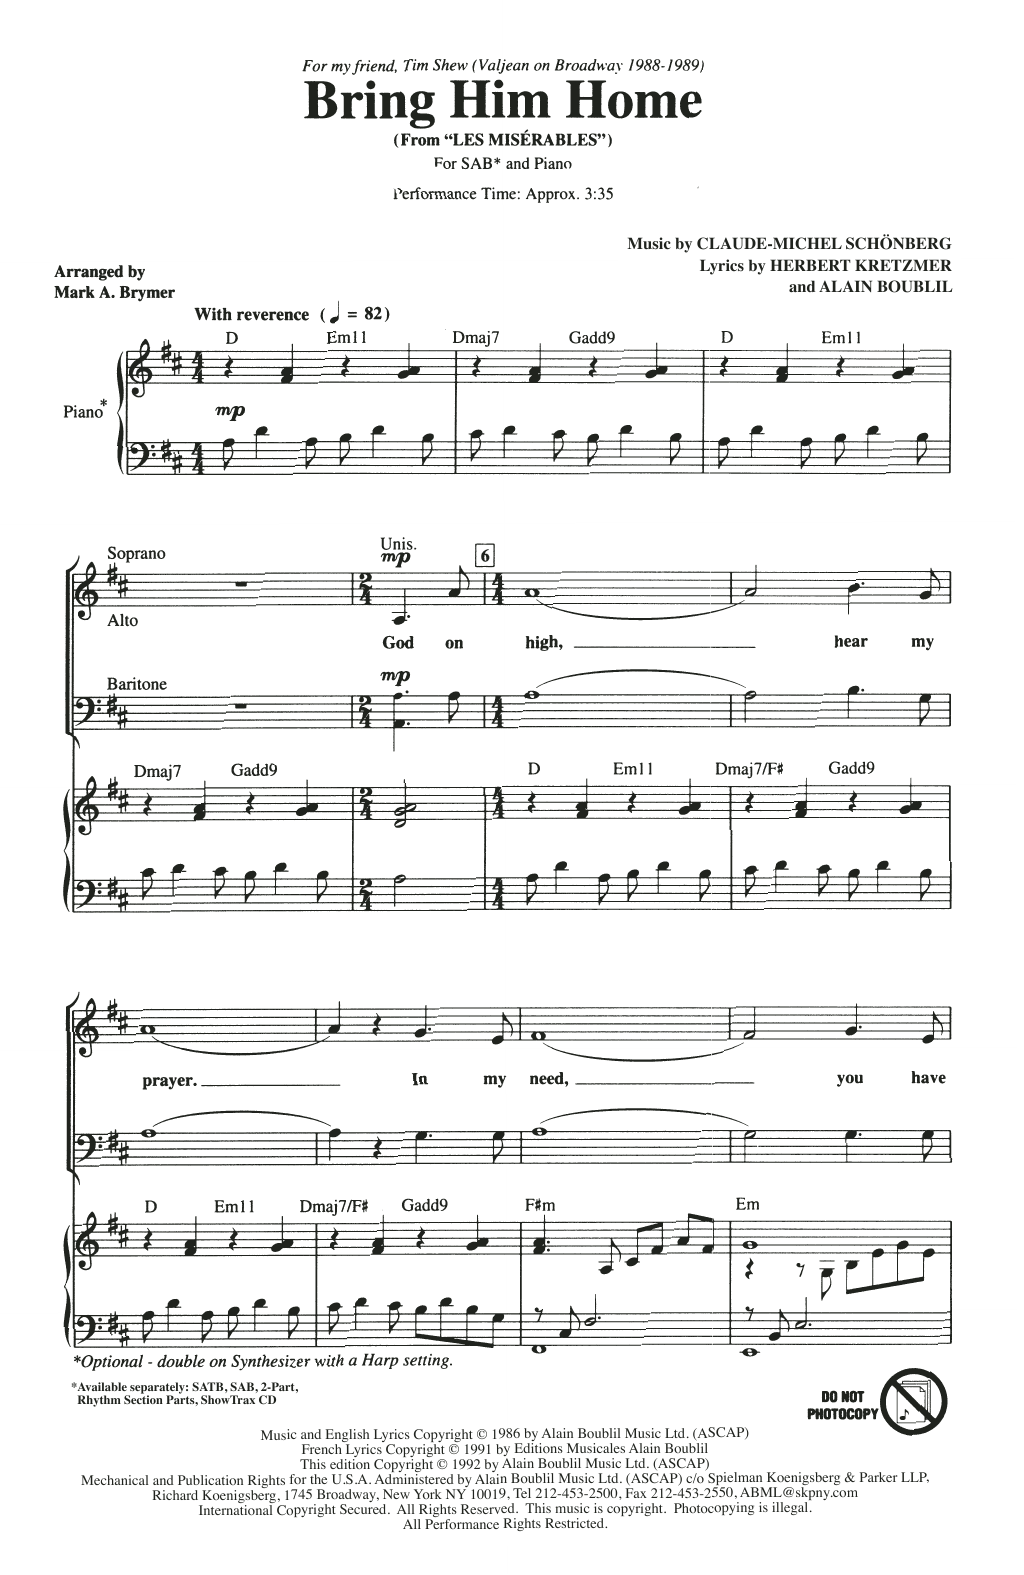 Boublil & Schönberg Bring Him Home (from Les Miserables) (arr. Mark Brymer) Sheet Music Notes & Chords for 2-Part Choir - Download or Print PDF